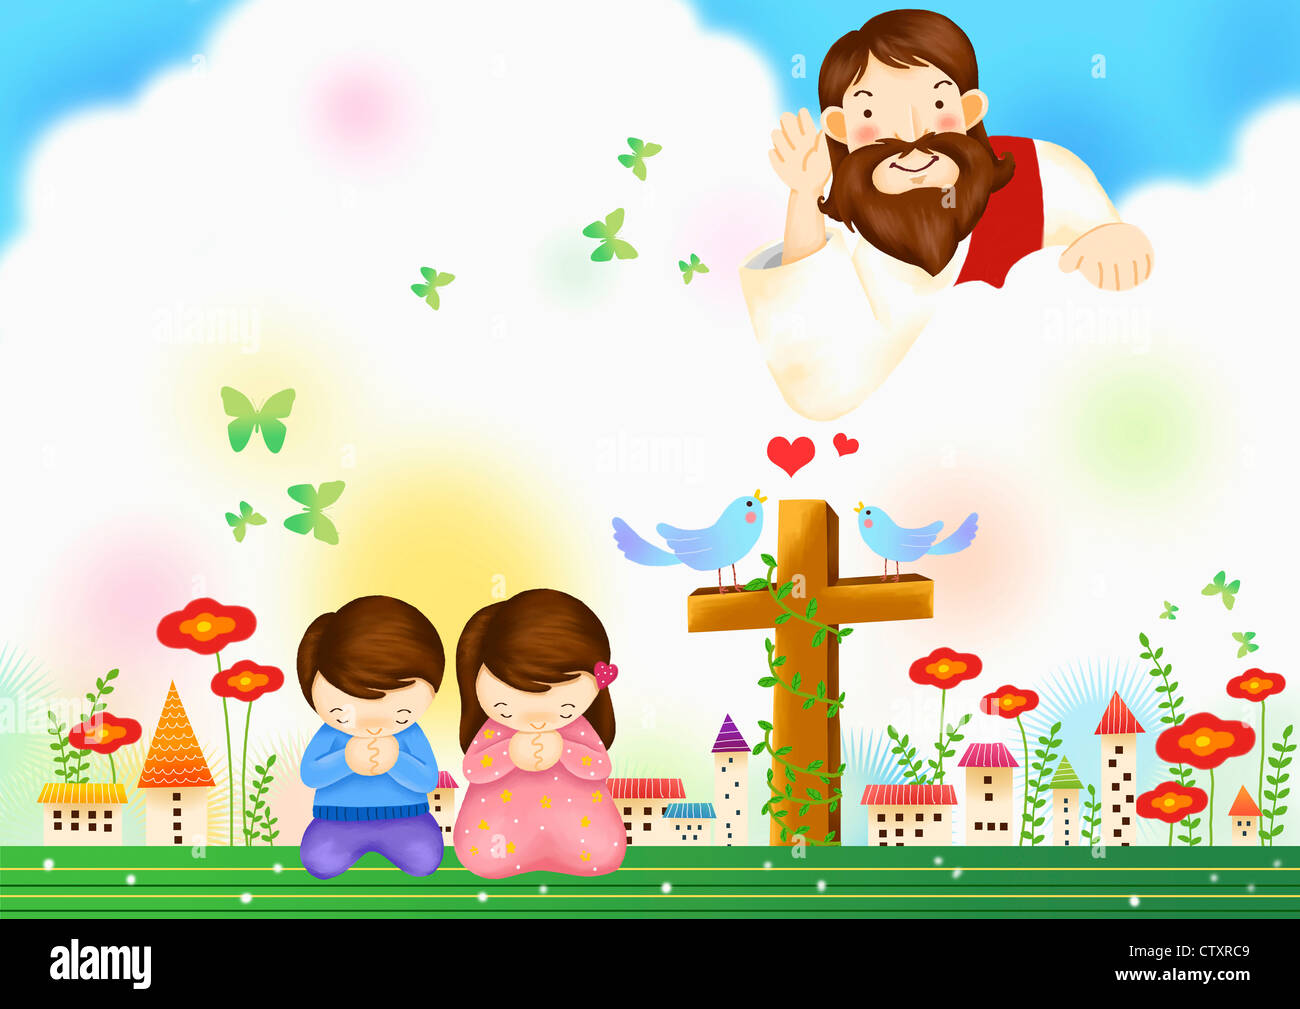 The Jesus listening to the praying children Stock Photo - Alamy